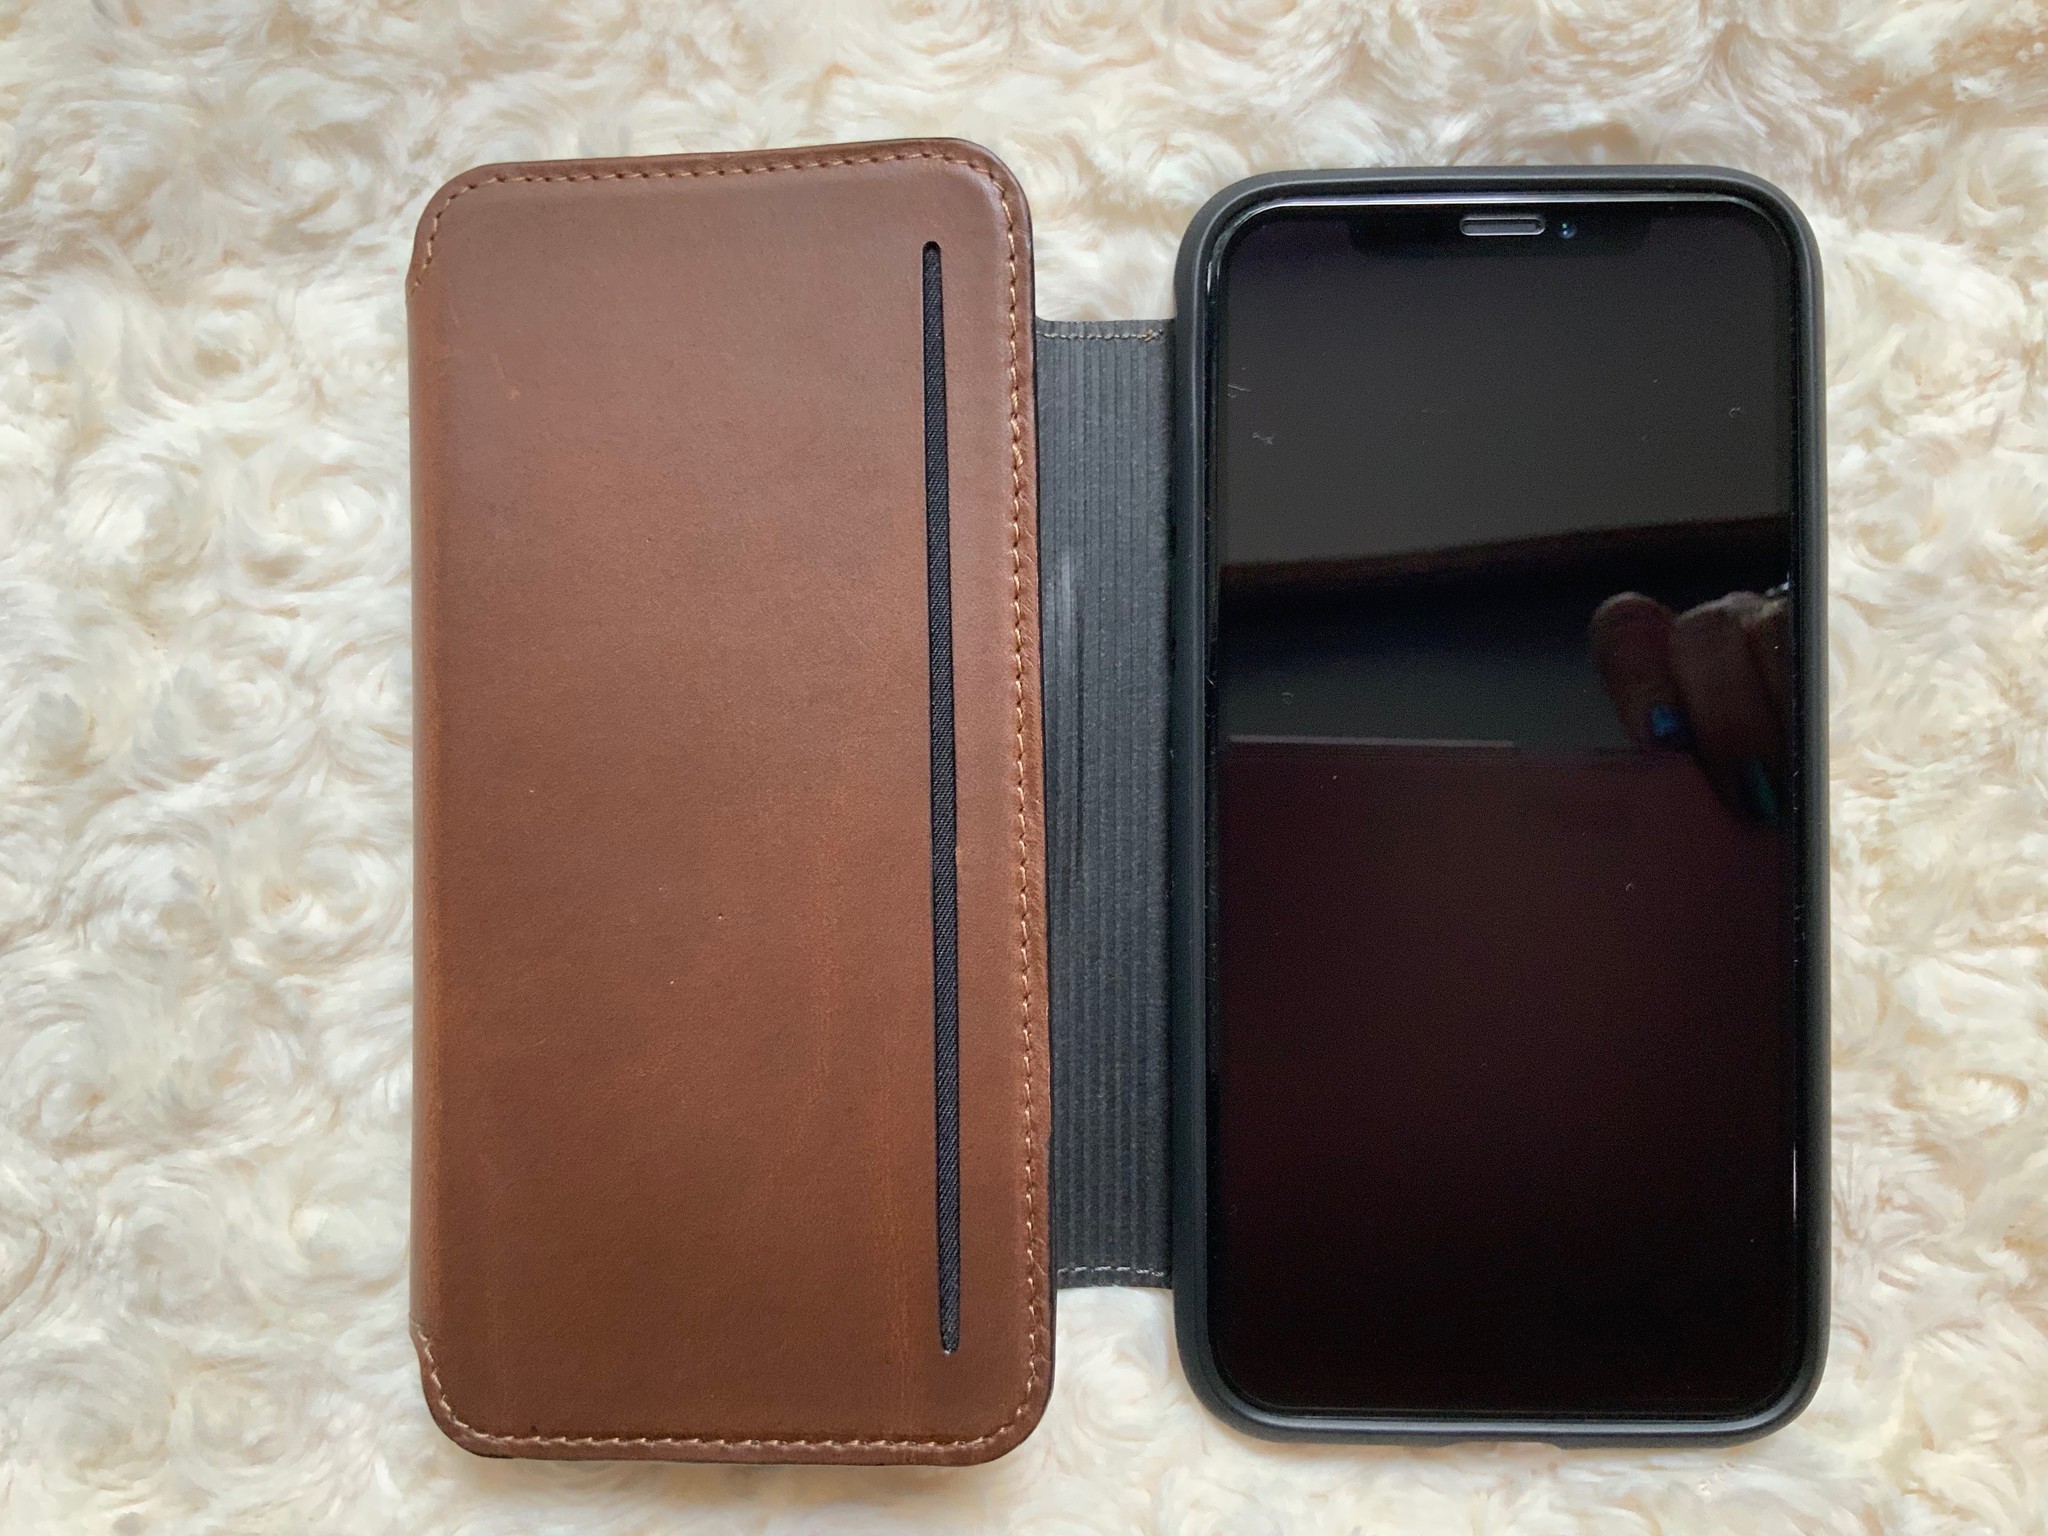 Nomad Rugged Tri-Folio iPhone wallet case 